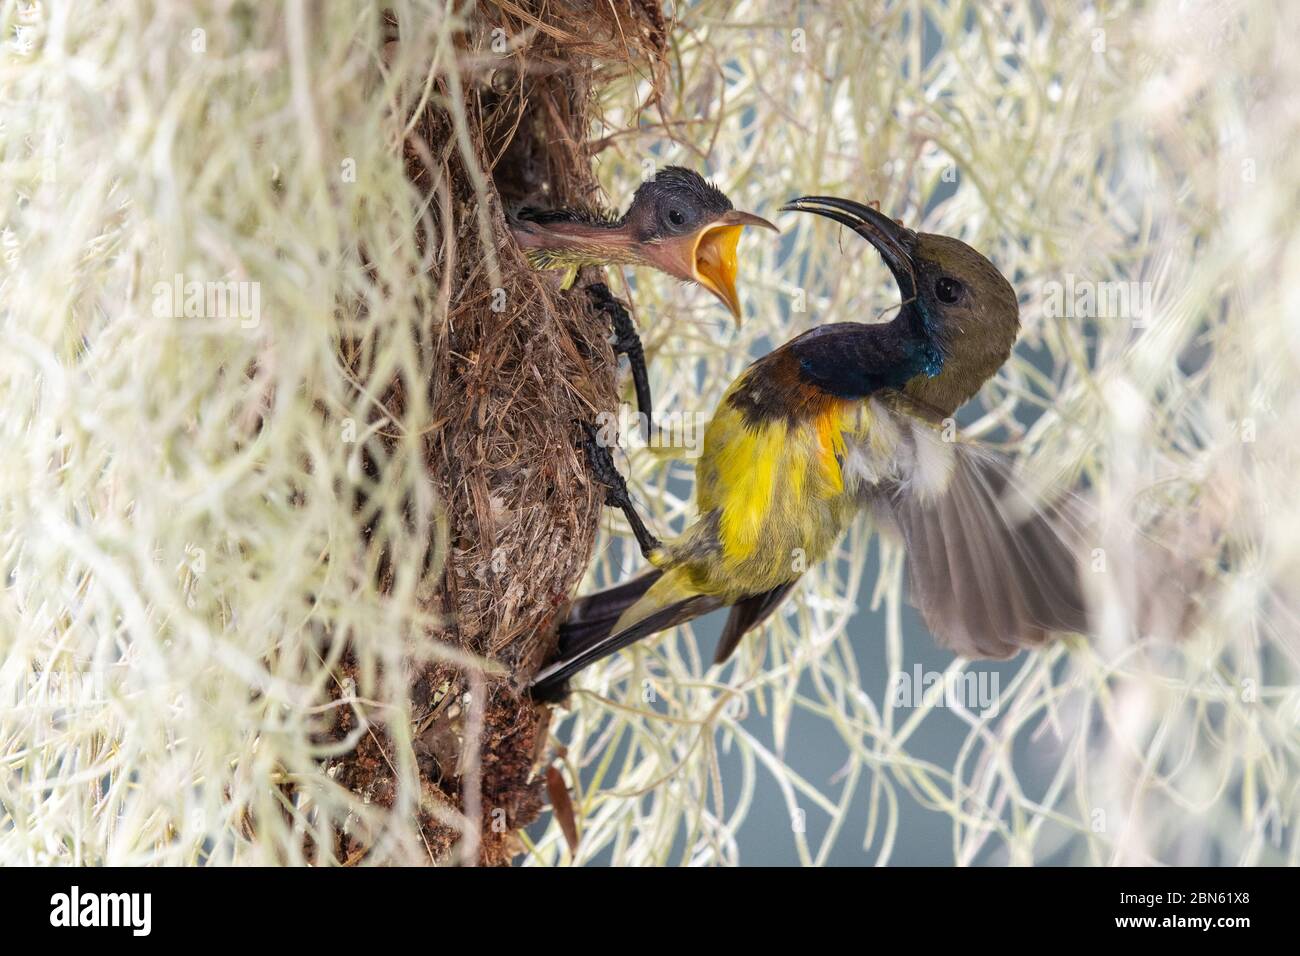 Bird feeds its offspring, parenting season Stock Photo